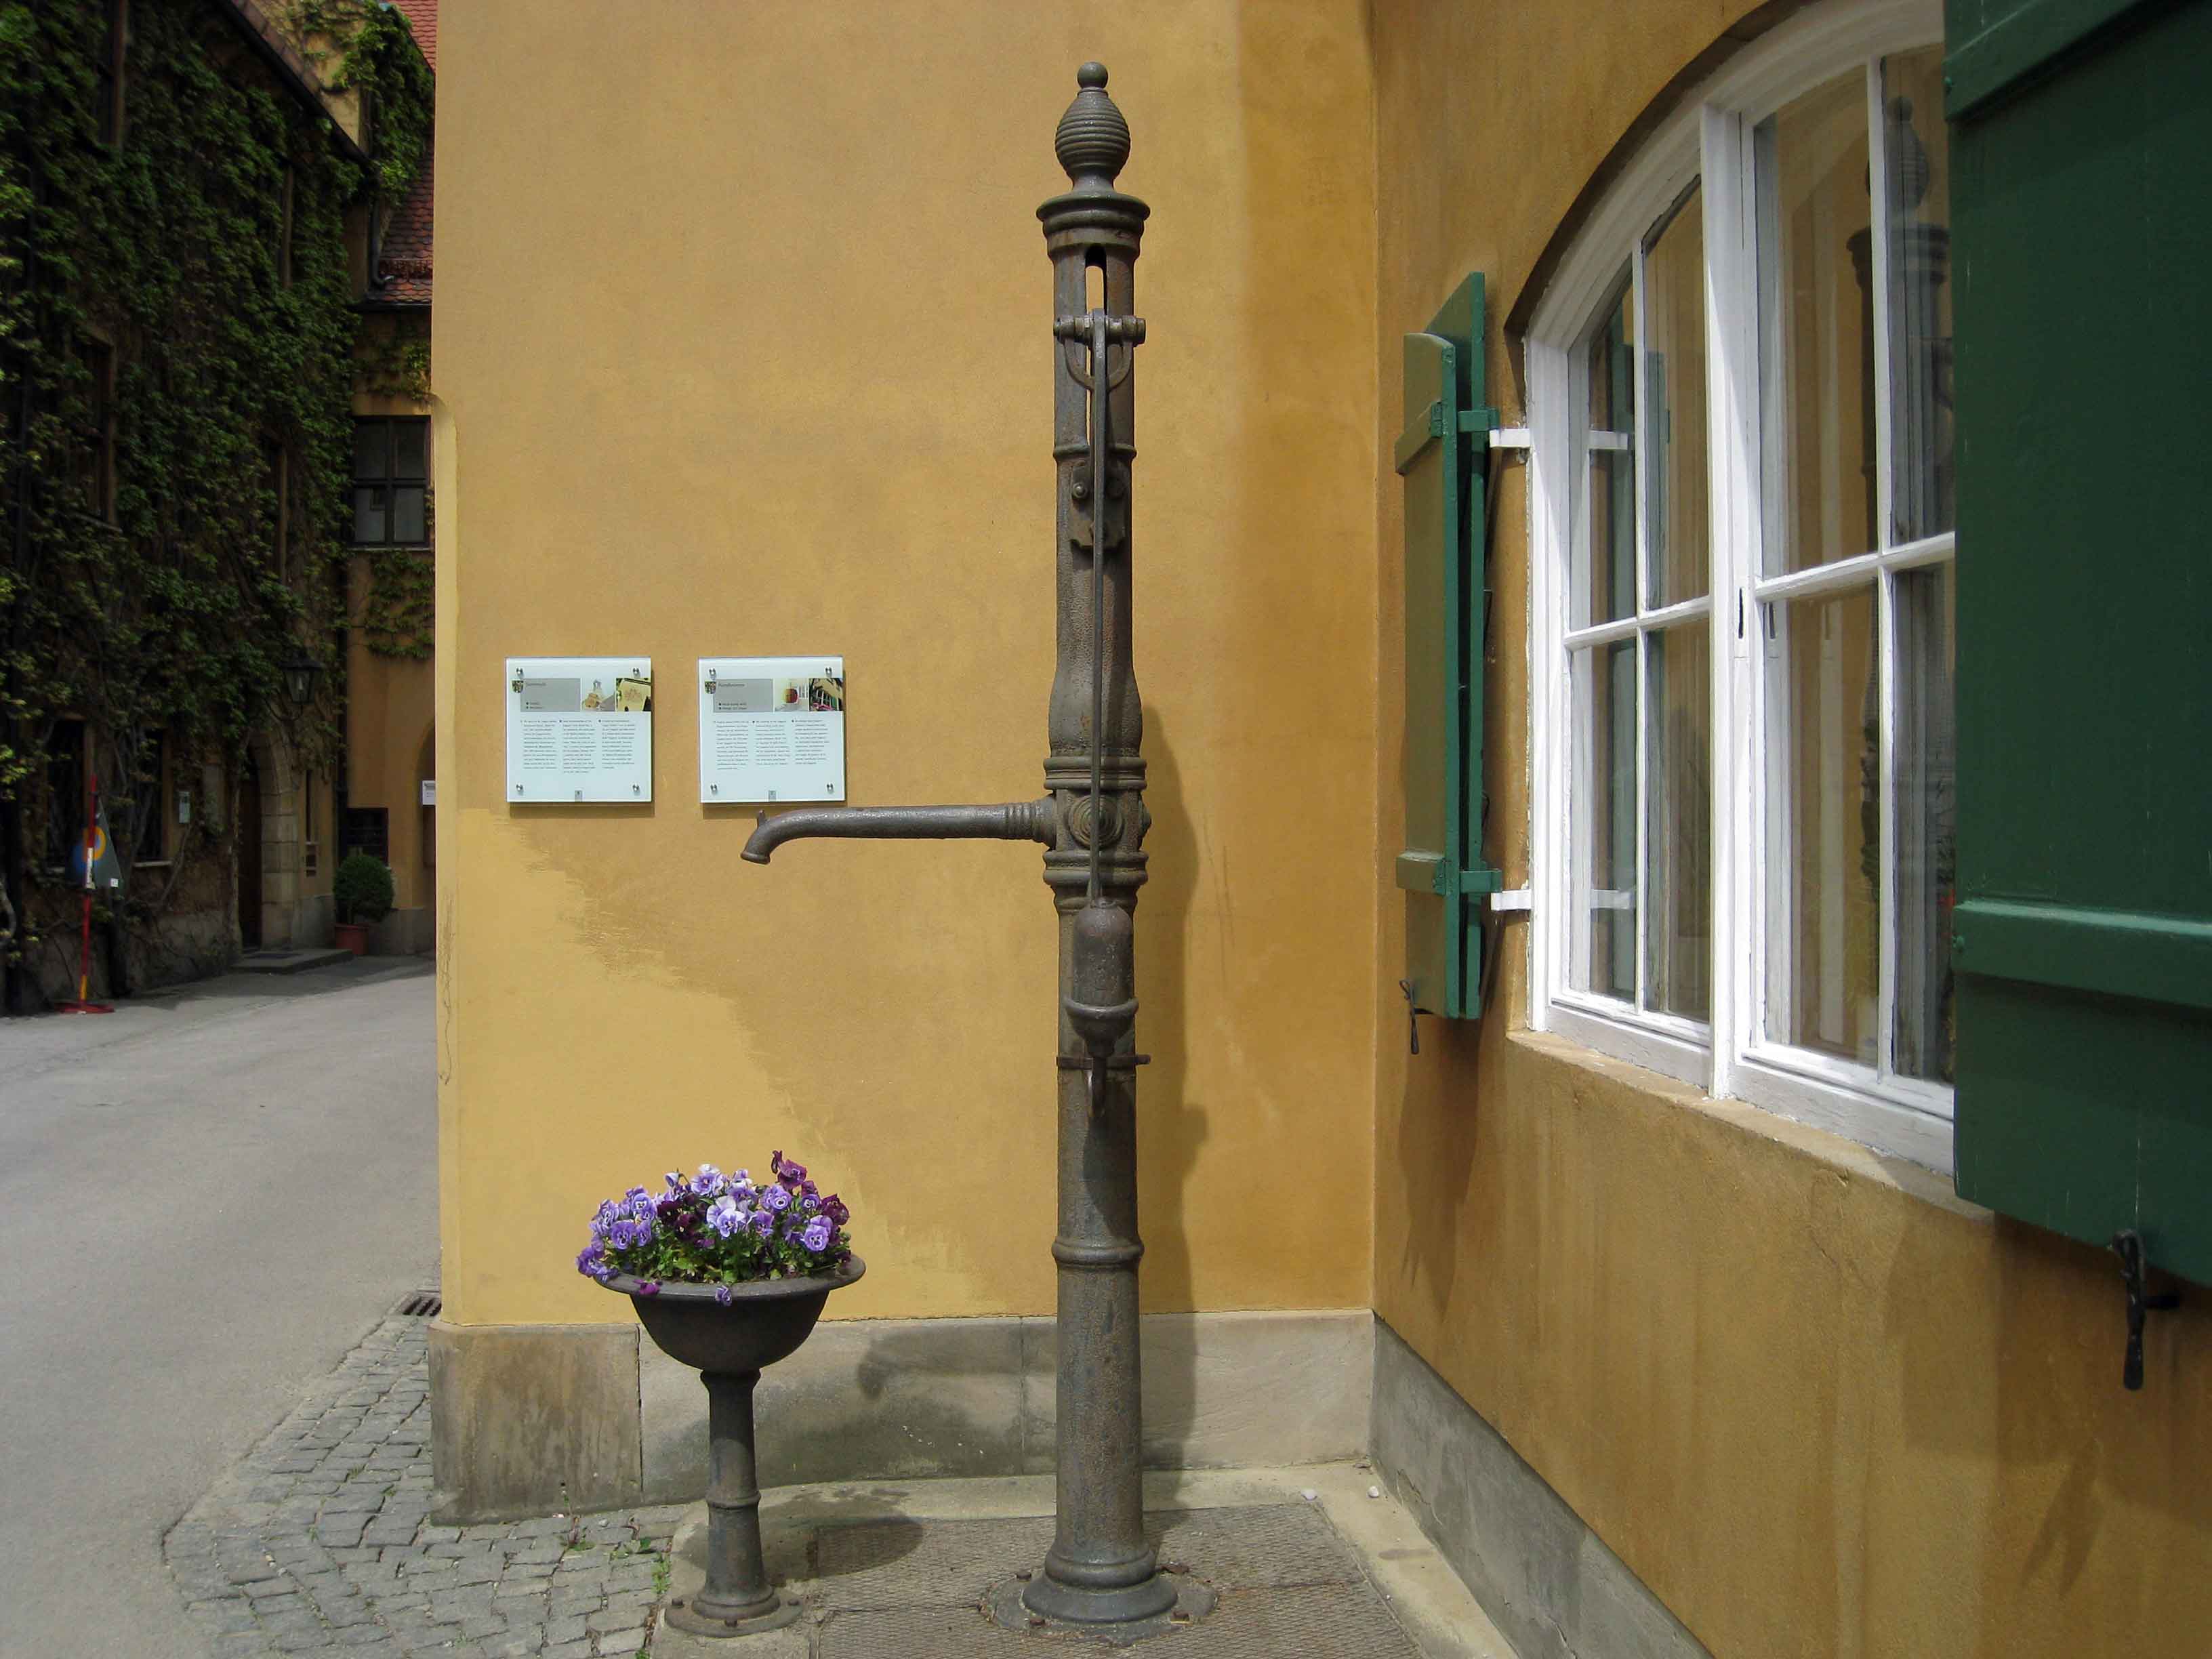 Old cast iron basin fountain installed in 1744 - Fuggerei Village-Augsburg.